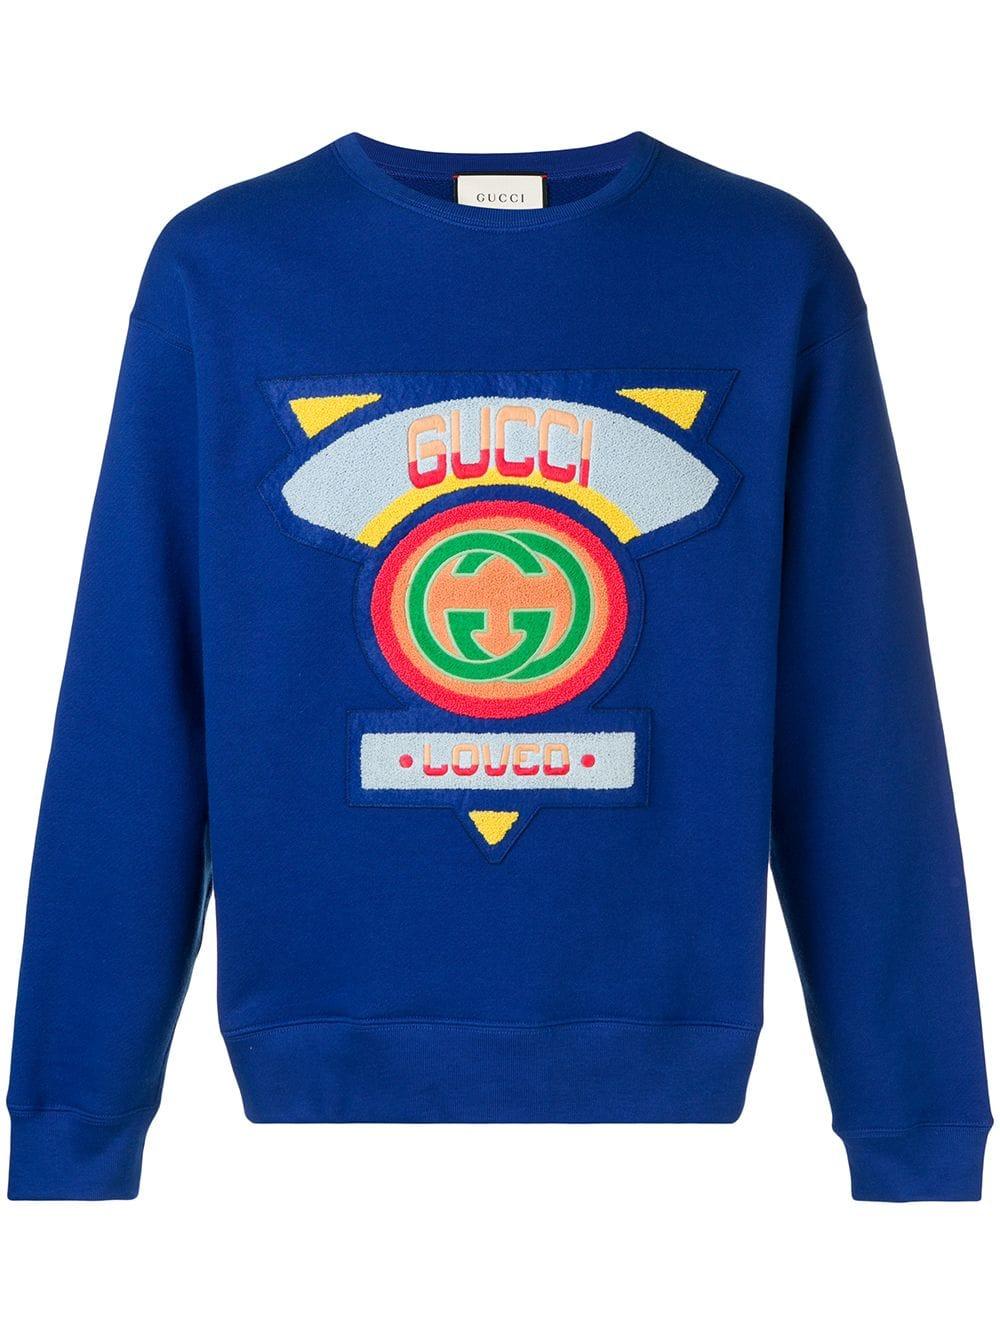 Gucci Sweatshirt 80s Patch Store, SAVE 43% - mpgc.net